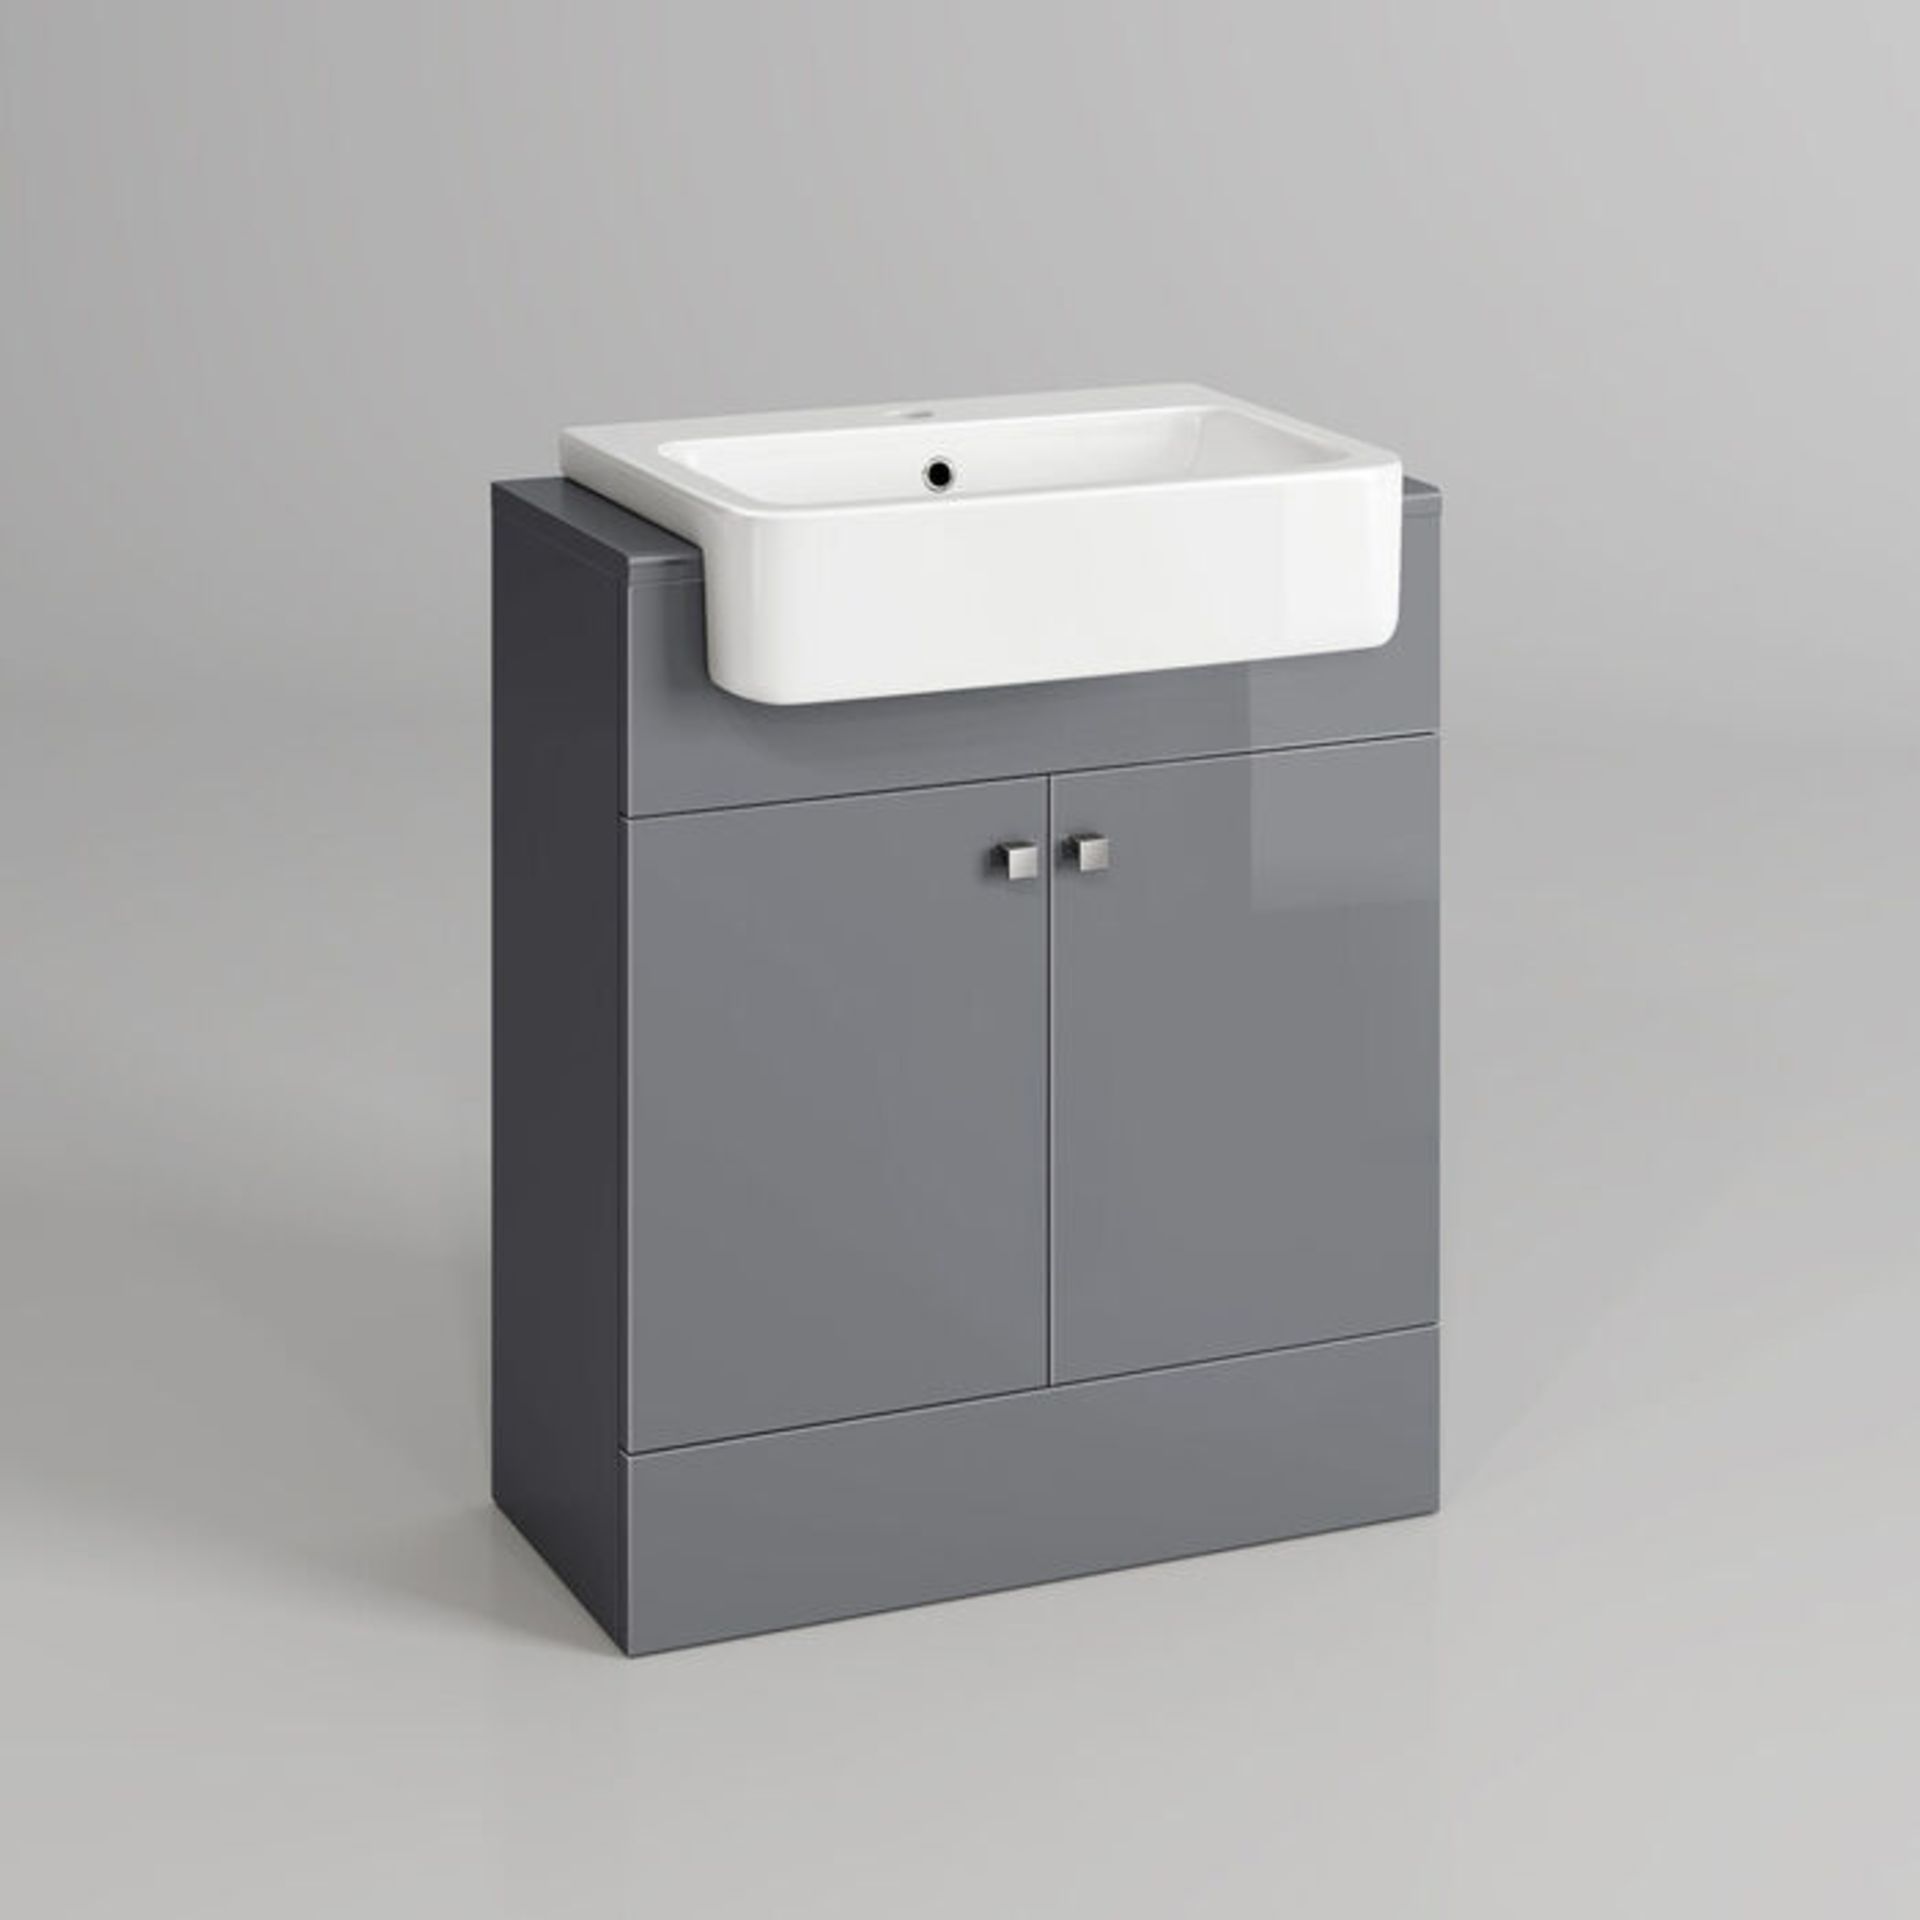 (AA27) 660mm Dayton Gloss Grey Sink Vanity Unit - Floor Standing. RRP £574.99. COMES COMPLETE ... - Image 4 of 5